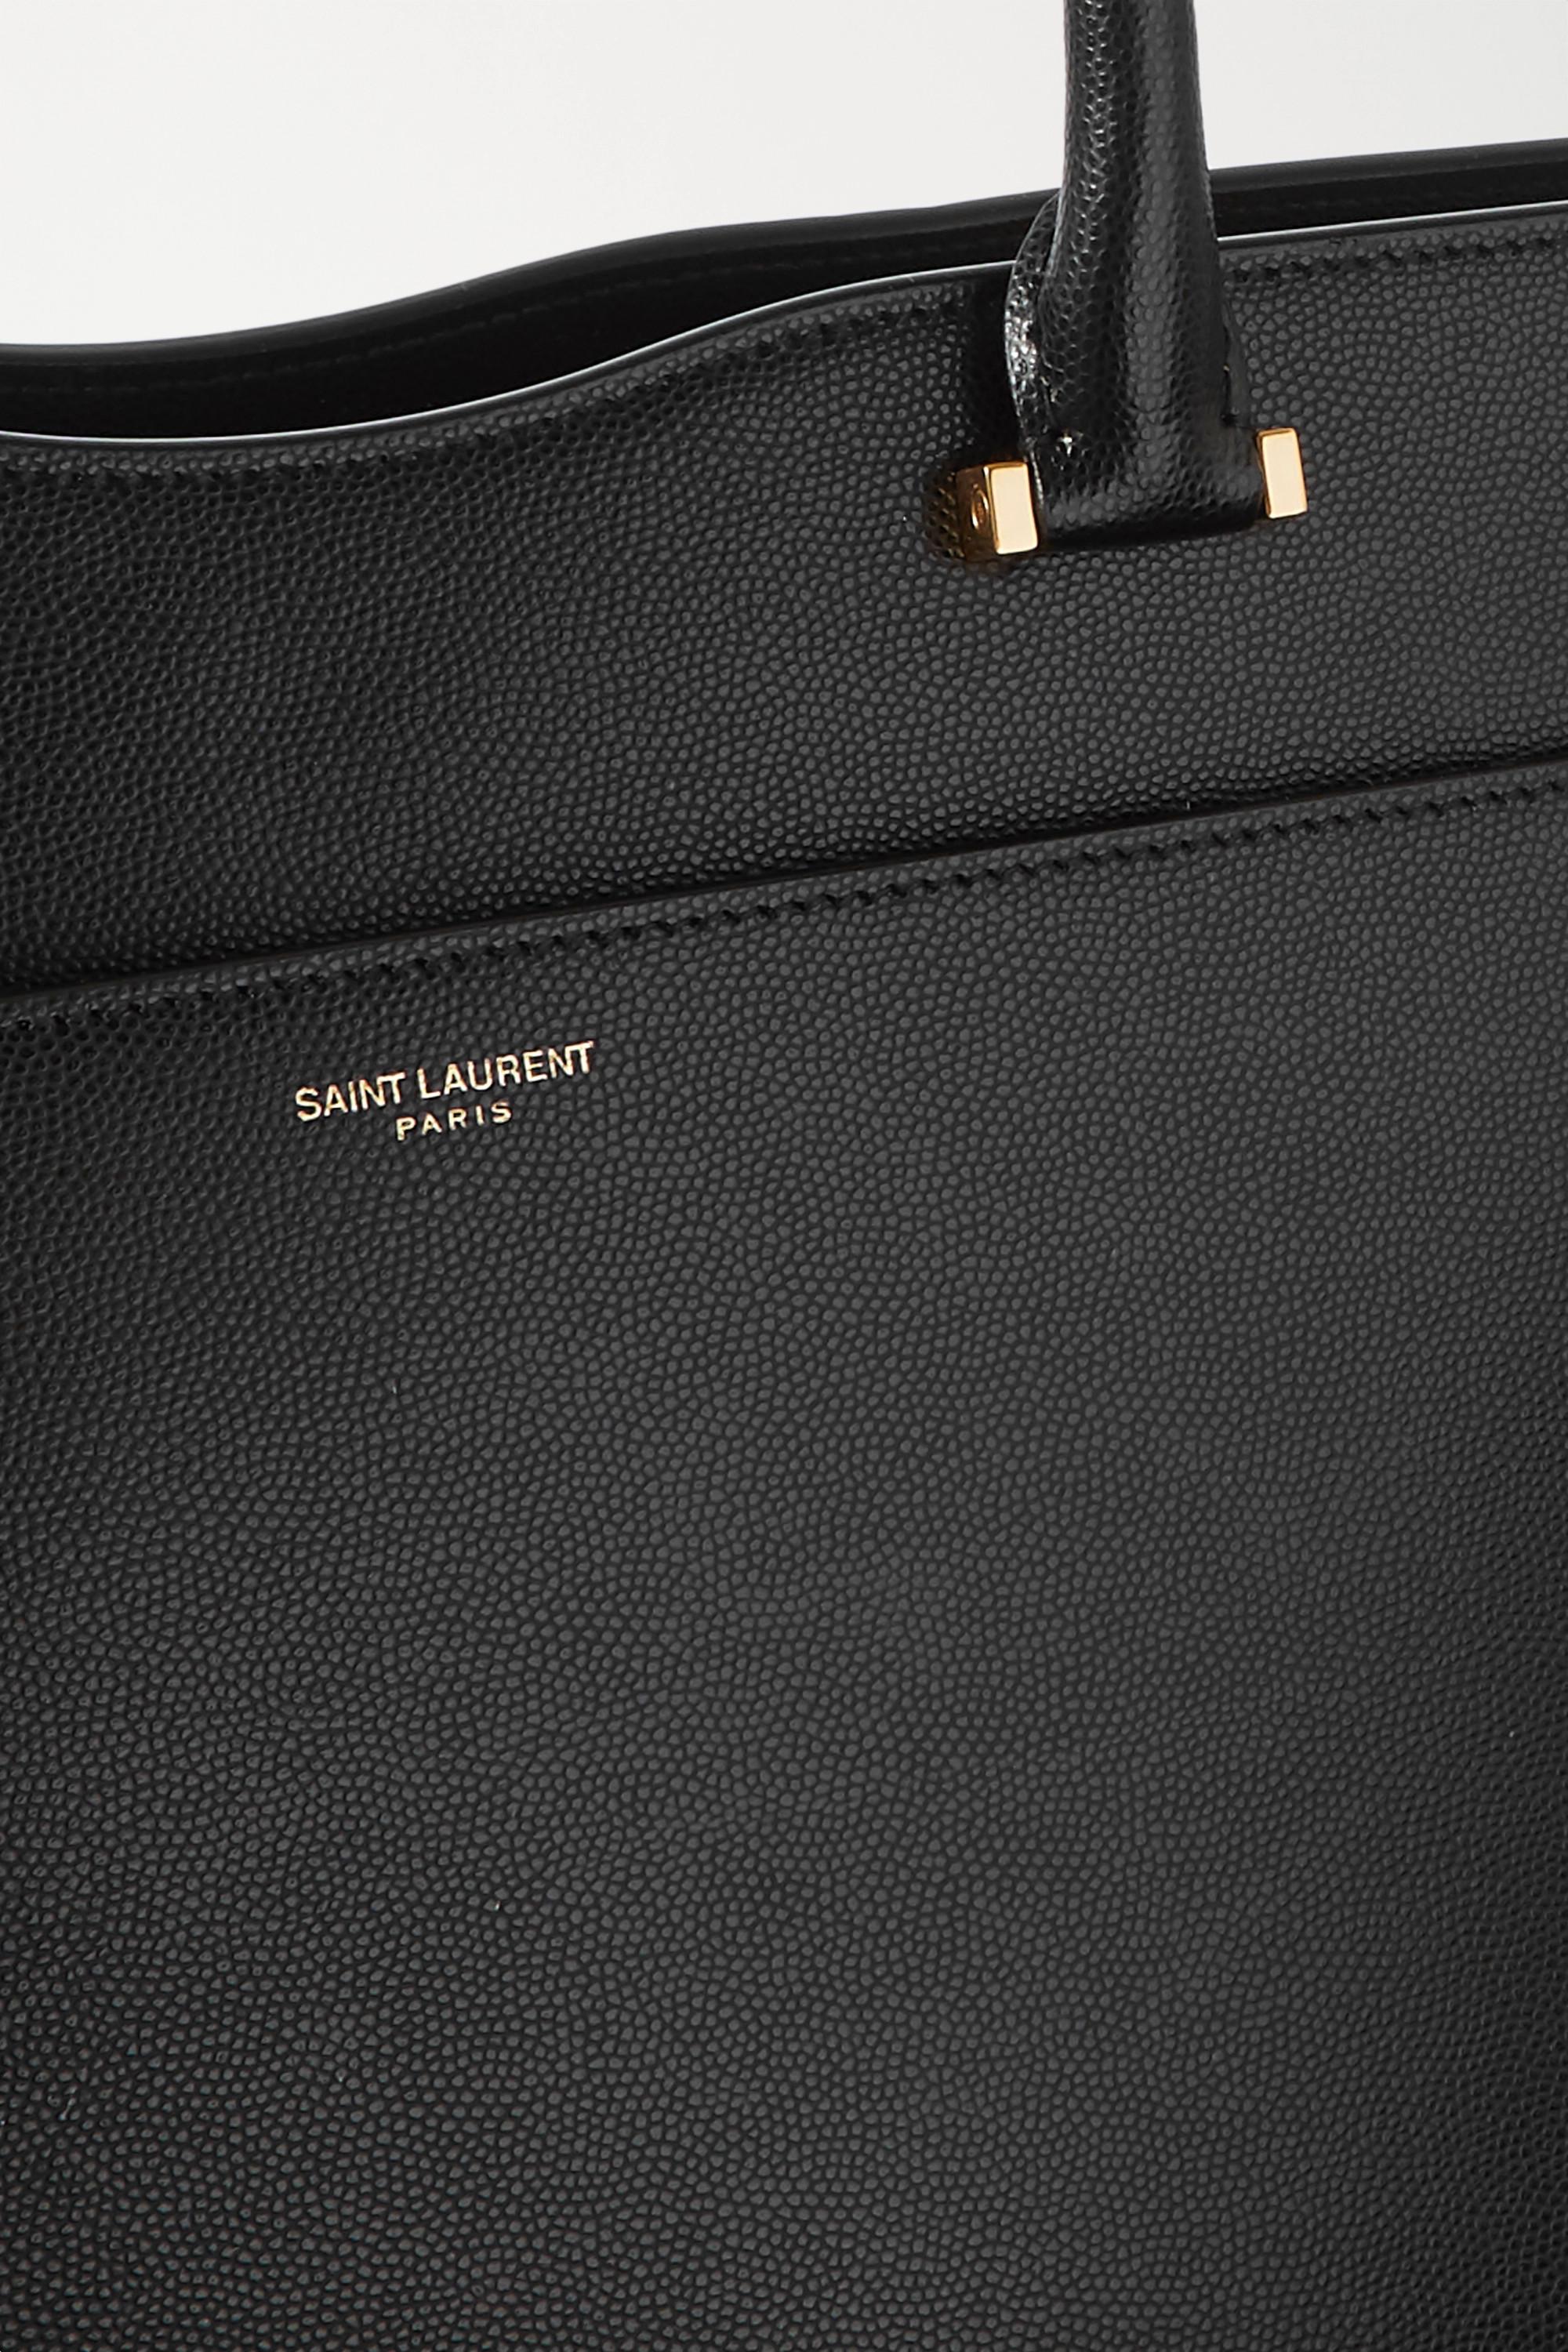 Saint Laurent Uptown Medium Textured-leather Tote - Black